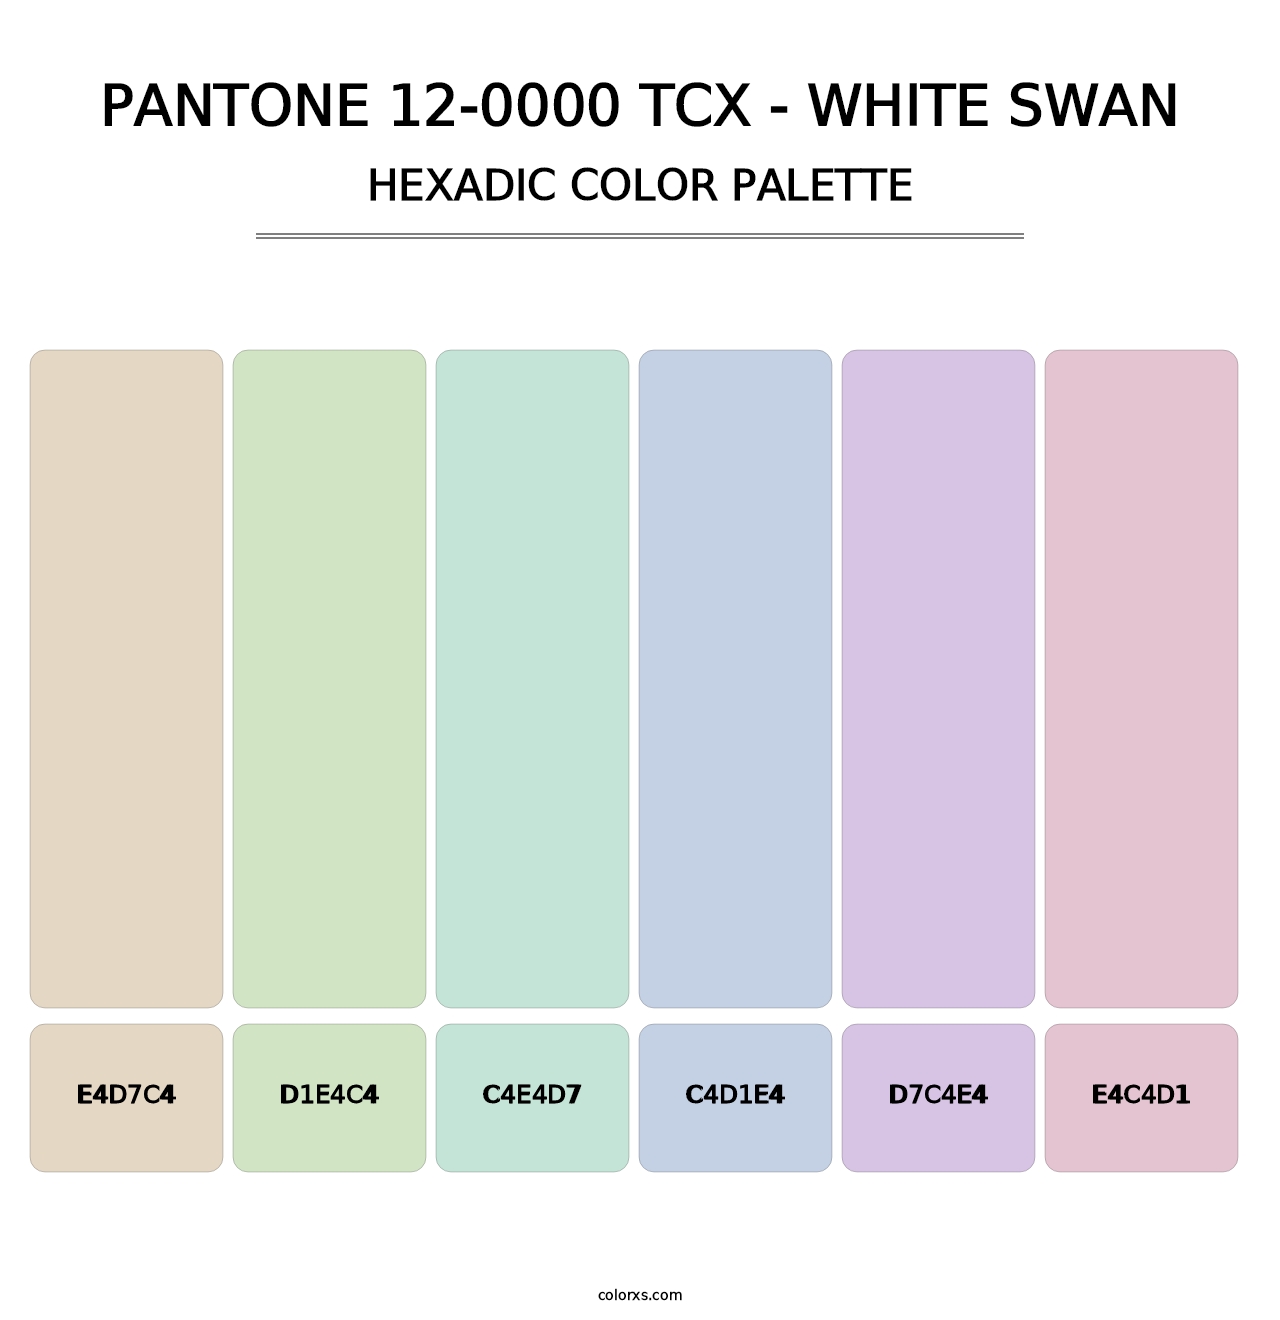 PANTONE 12-0000 TCX - White Swan - Hexadic Color Palette